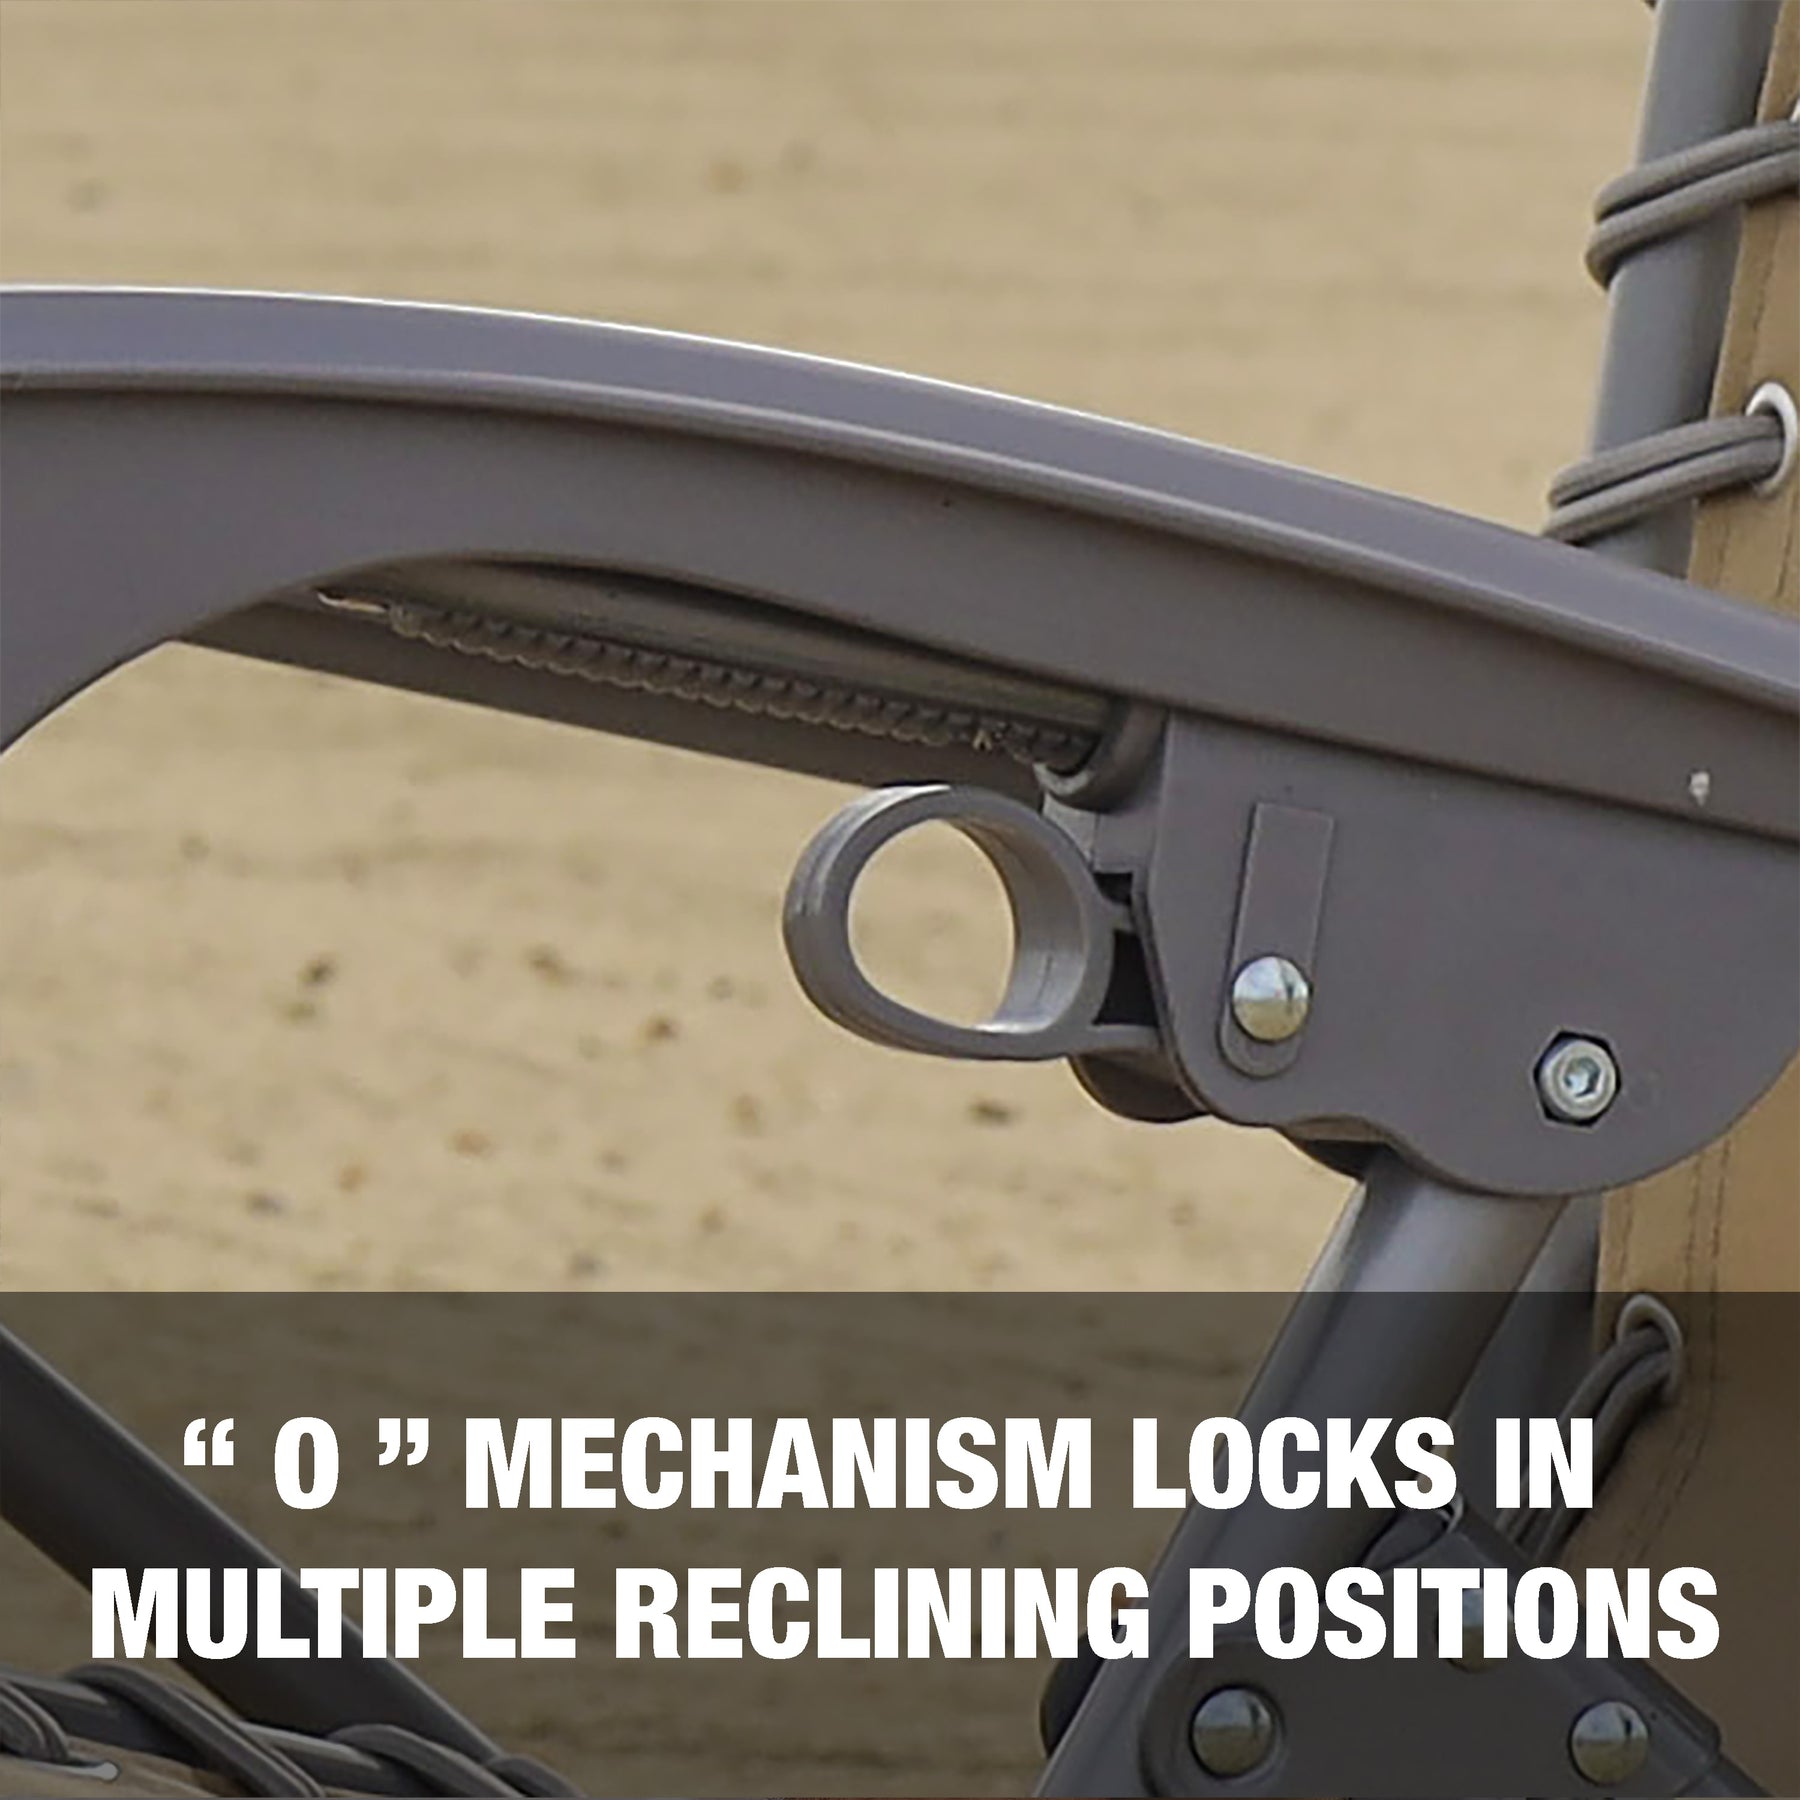 O mechanism locks in multiple reclining positions.